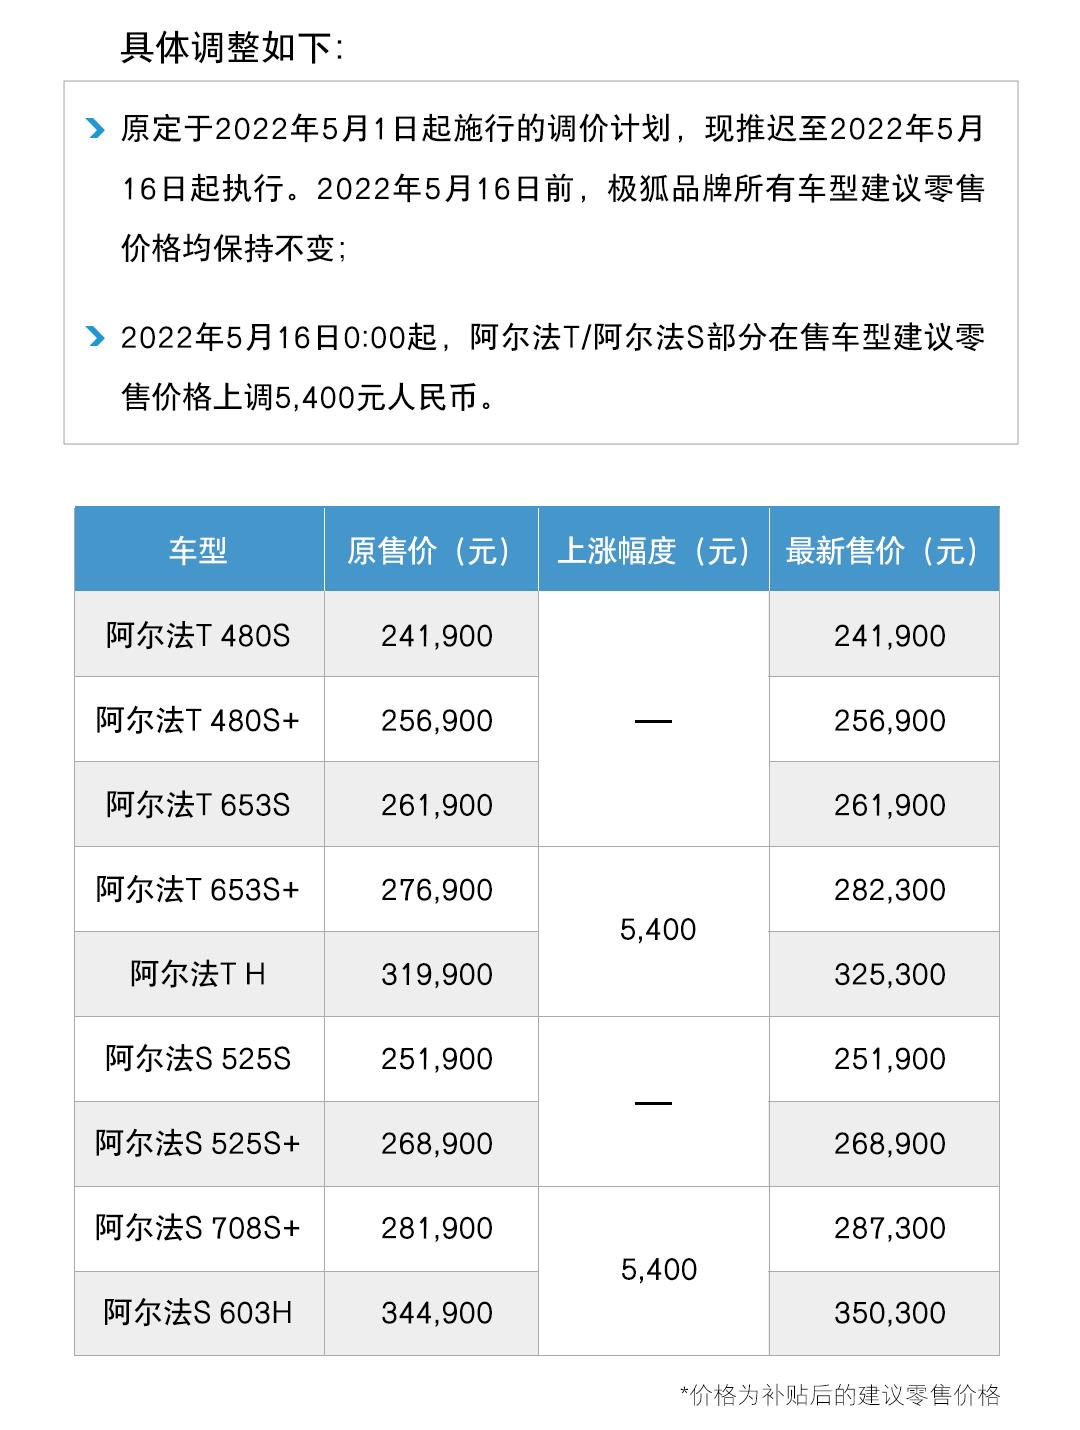 ARCFOX极狐4月份交付新车1140辆 环比增长54%